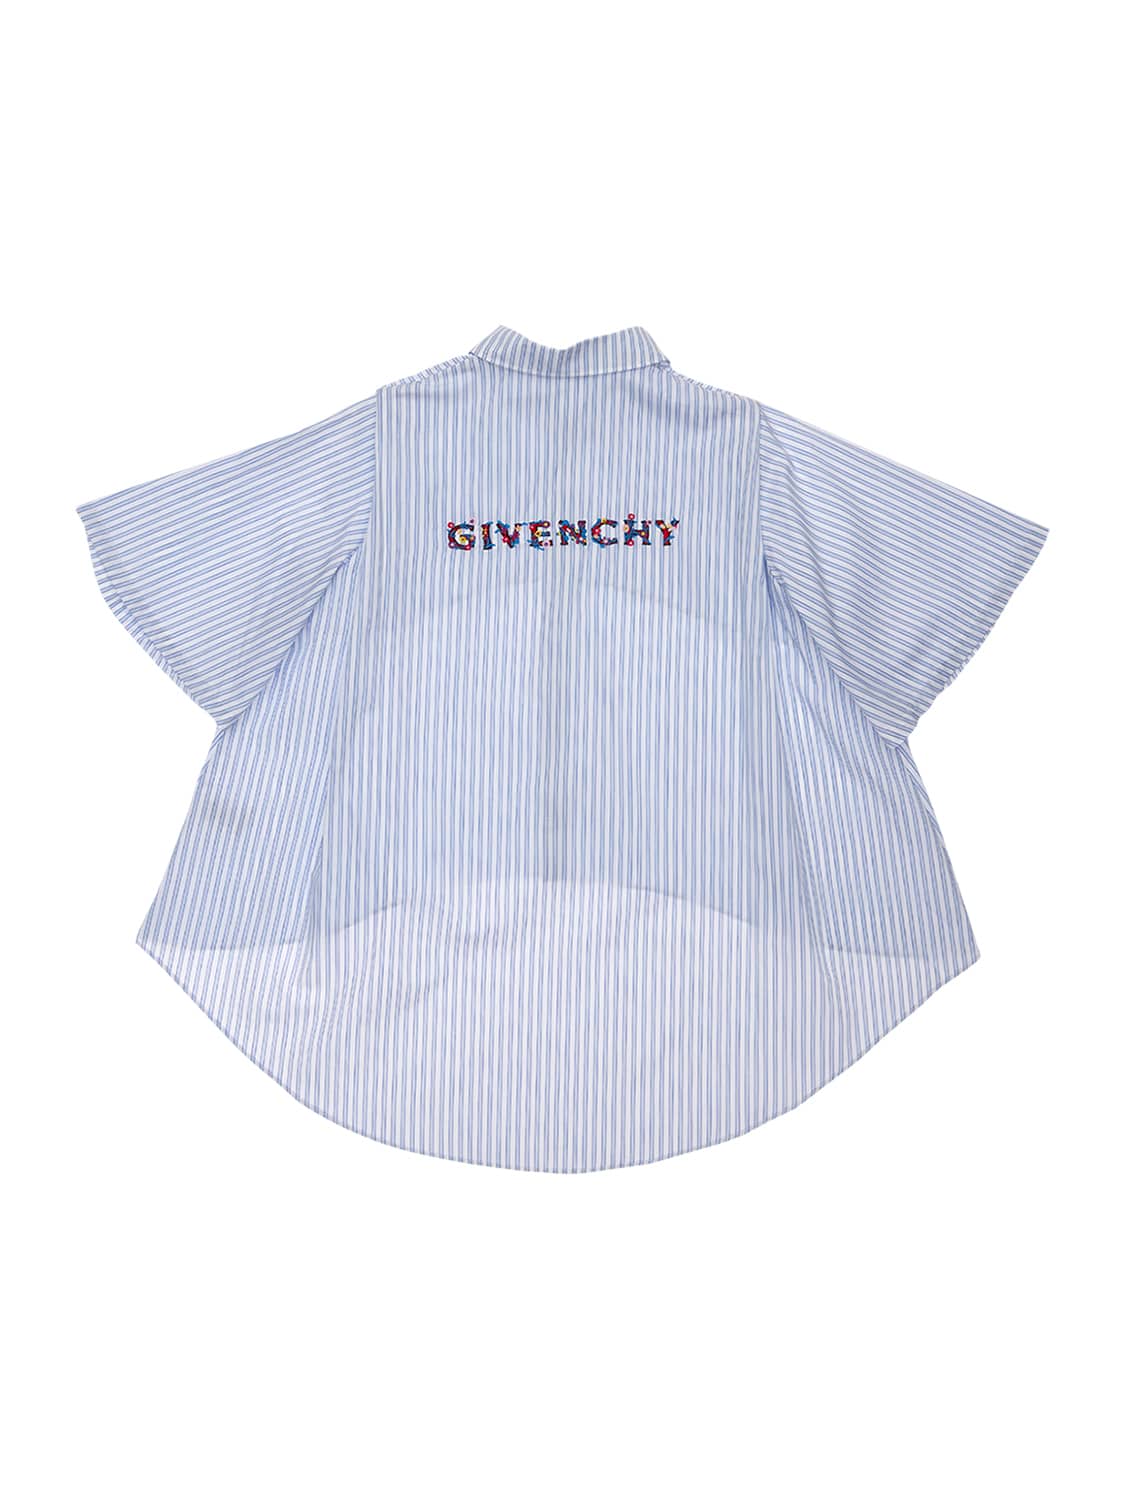 Givenchy Kids' 条纹棉质府绸衬衫 In White,blue